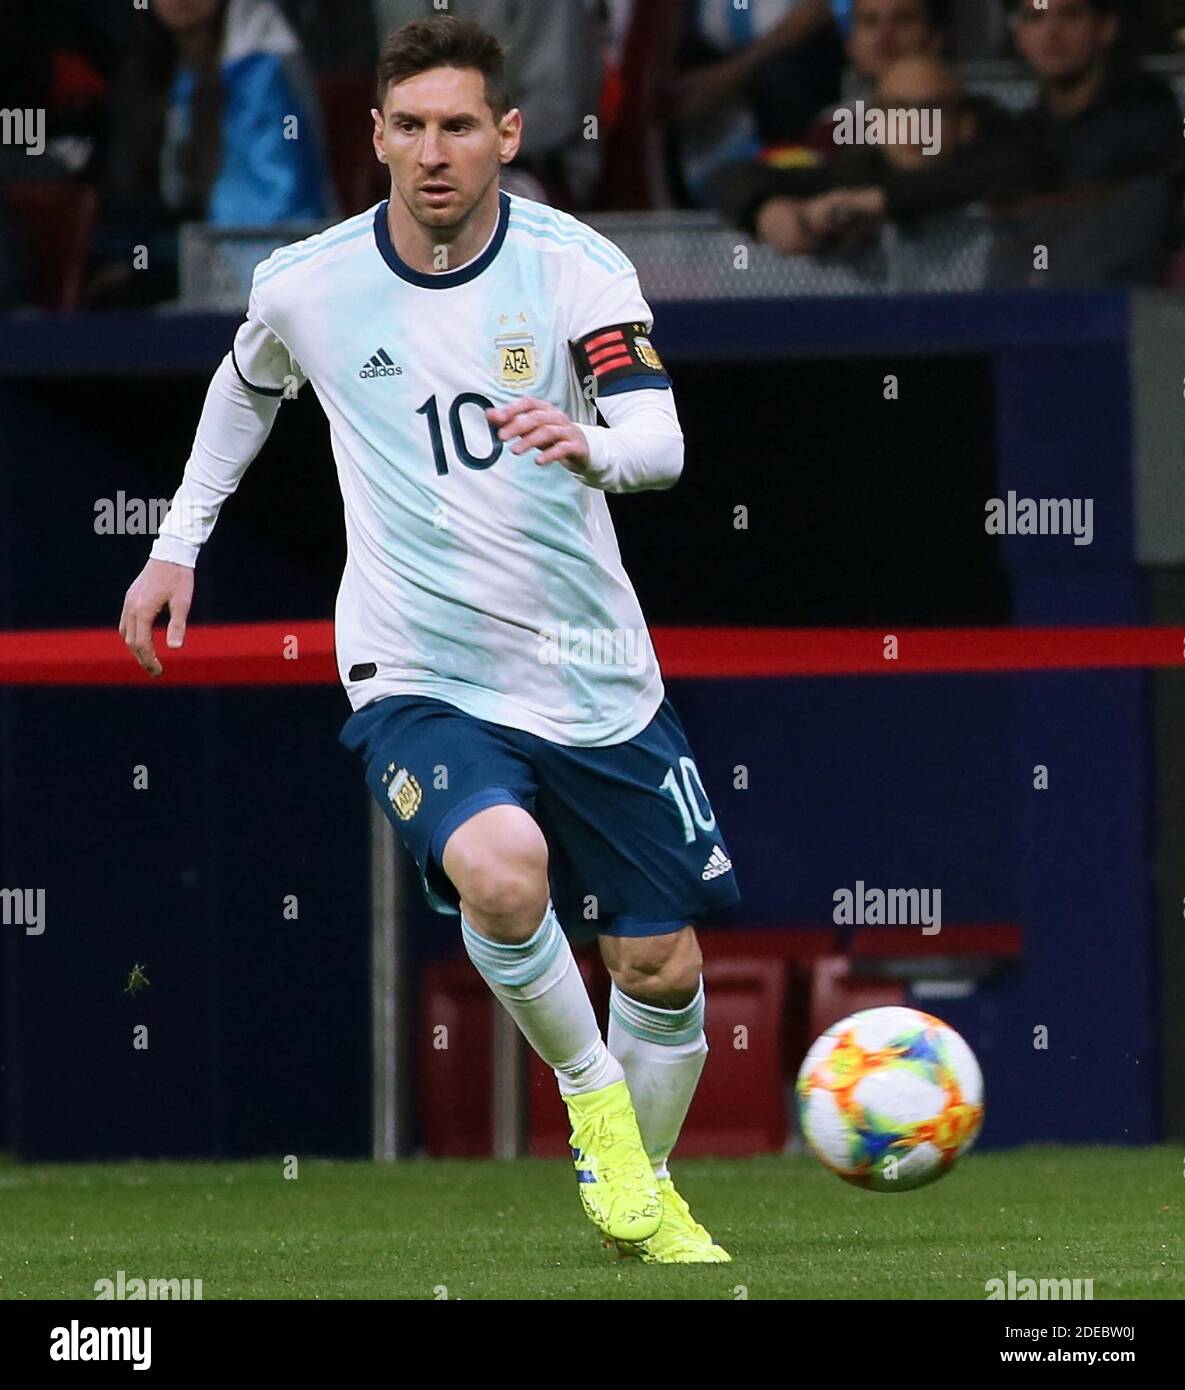 Lionel Messi of Argentina during International Adidas between Argentina and Venezuela at Wanda Metropolitano Stadium, in Madrid, Spain, on March 22, 2019. score Argentina 1 - Venezuela 3).